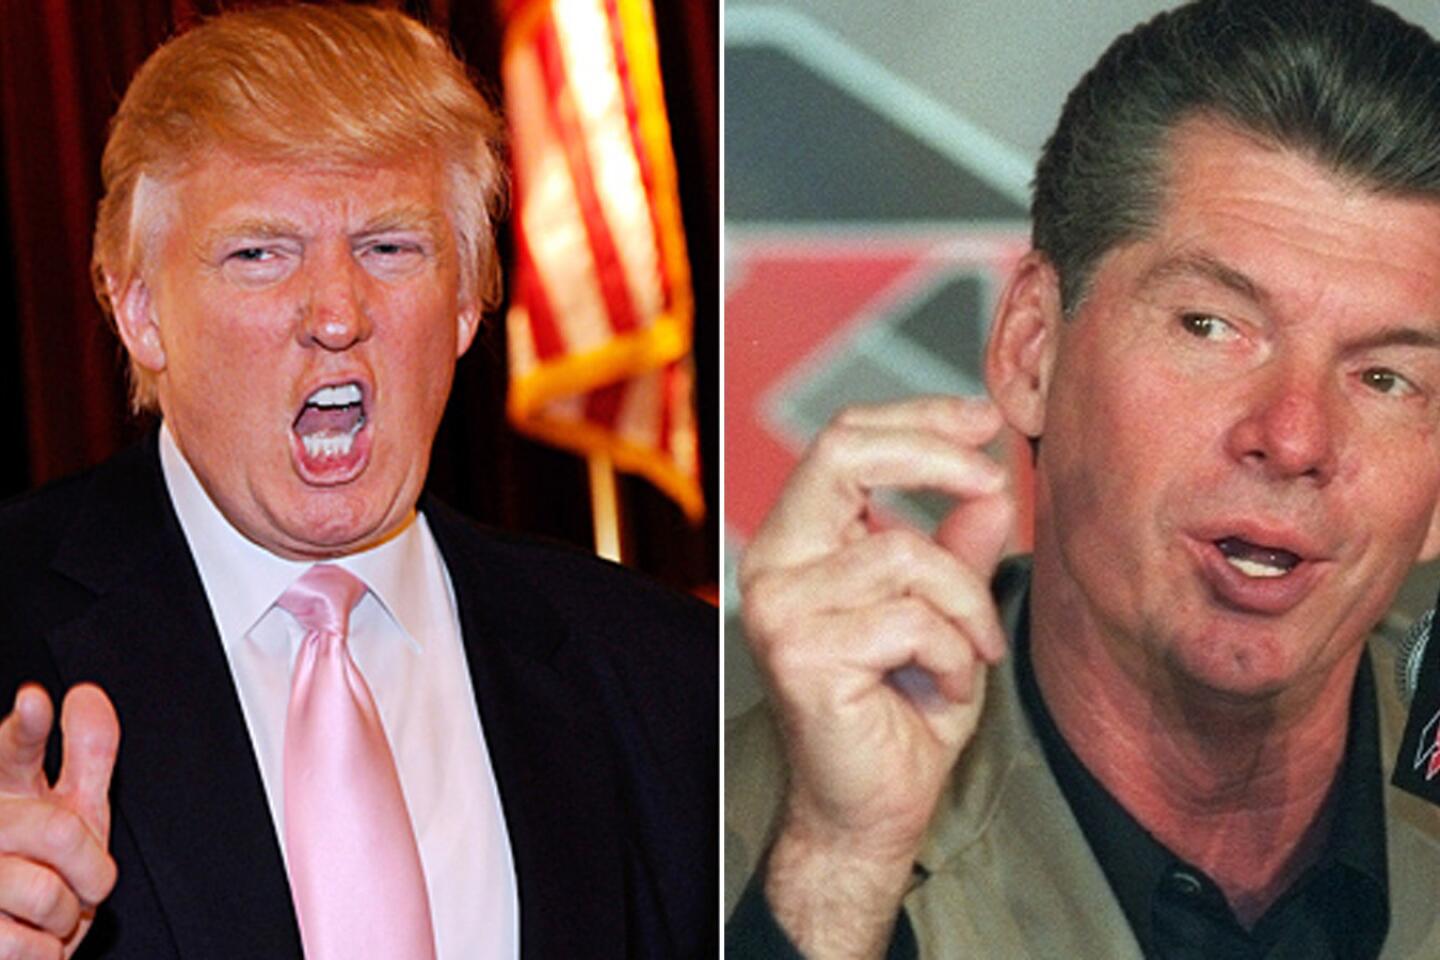 Donald Trump versus Vince McMahon